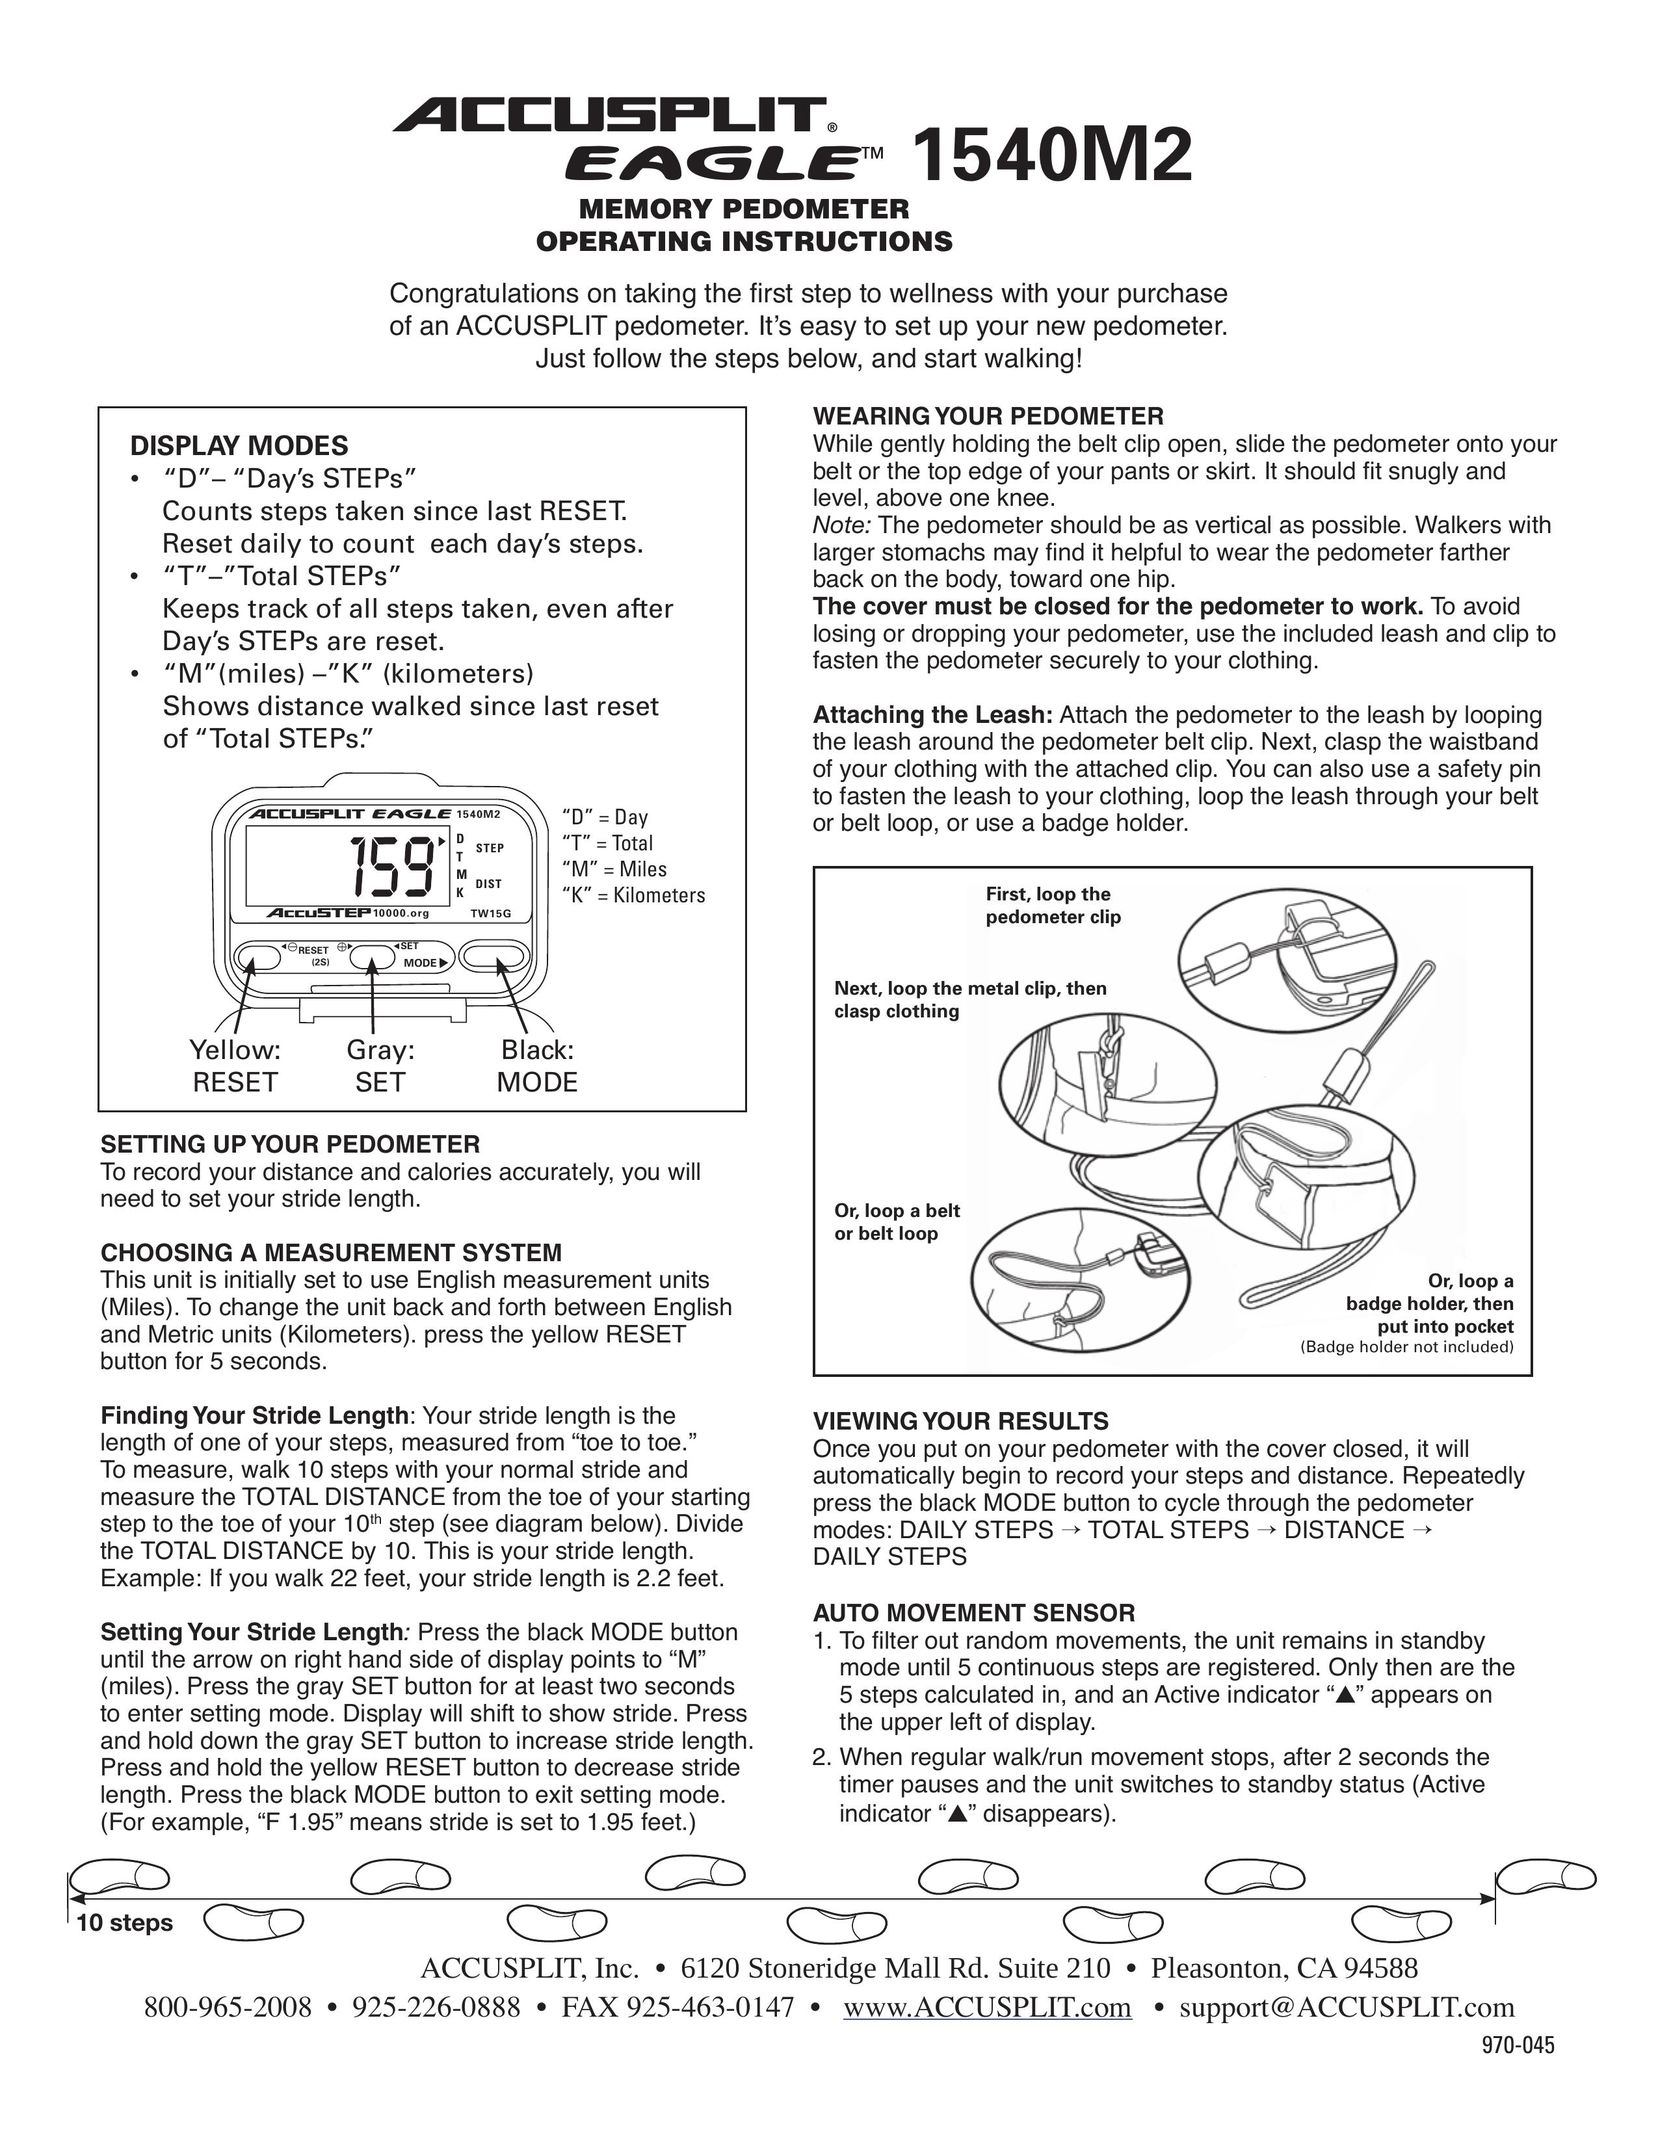 Accusplit 1540M2 Fitness Electronics User Manual